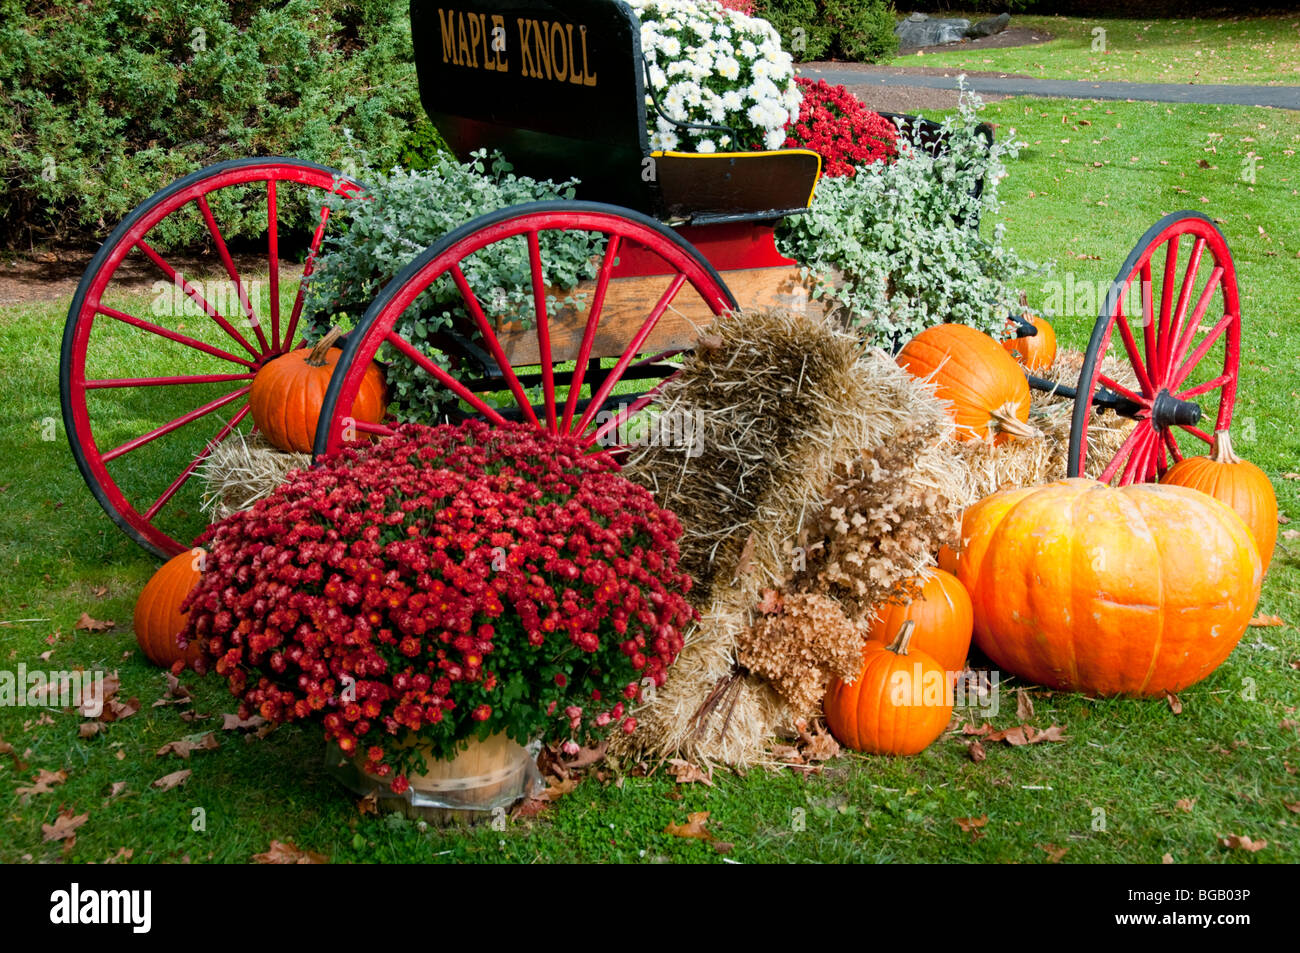 Halloween,Pumpkins,Squash,Corn Husks,Decorations, Masks,Jack o'Lanterns,Display,All Saints Day,Lee Country Club,Massachusetts,USA Stock Photo